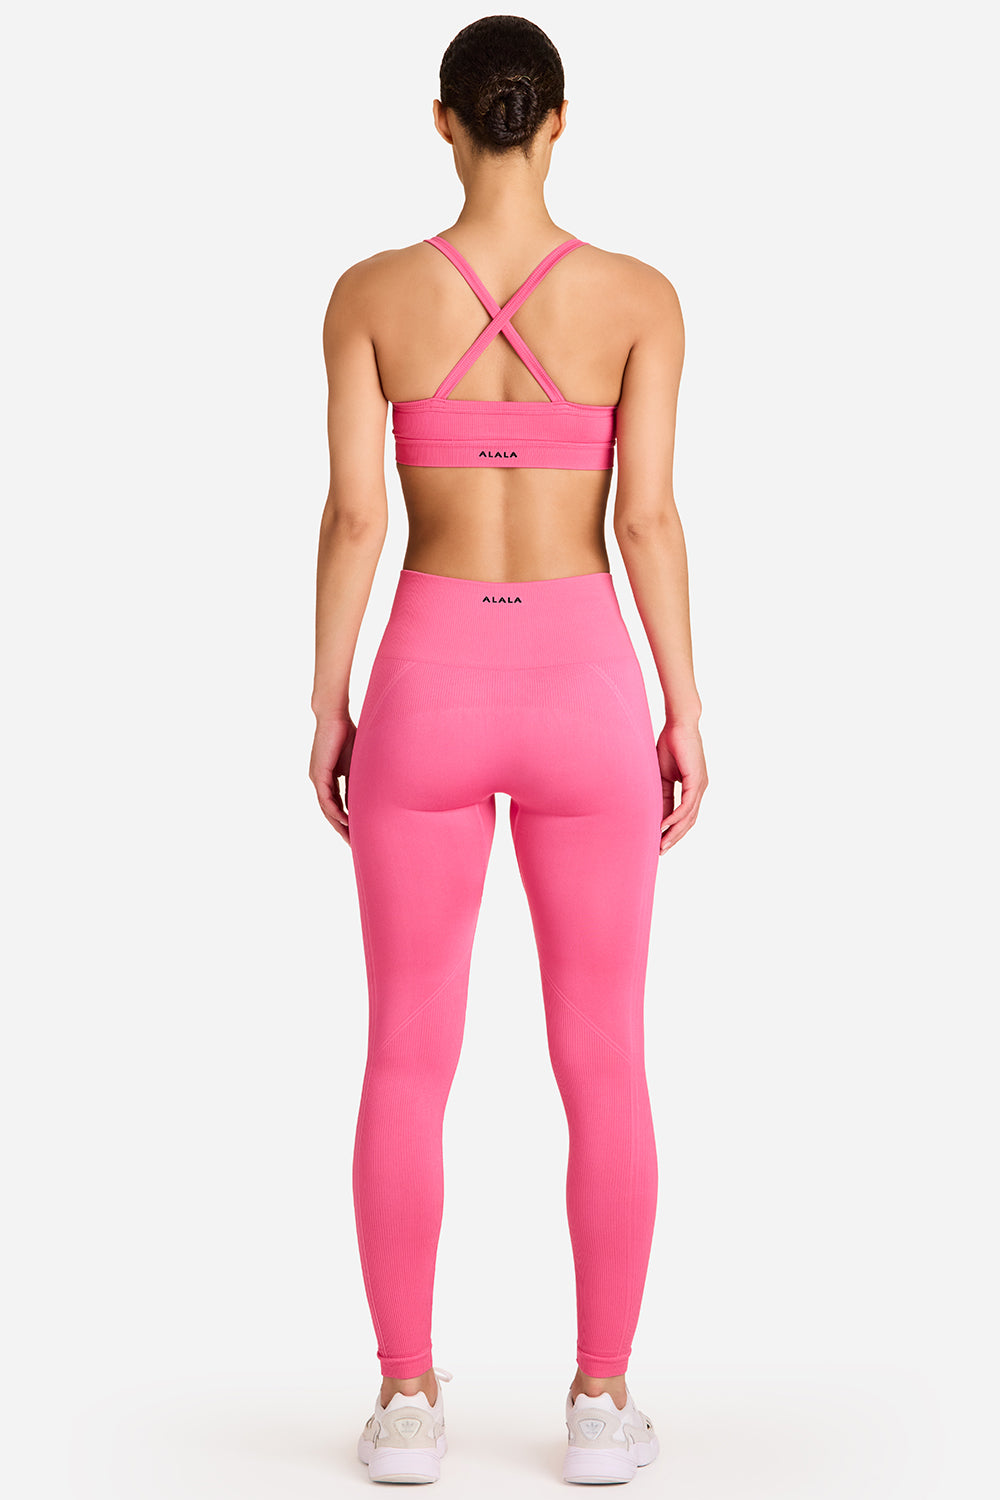 Cami Sports Bra - Light Support - Extra Small / Heather Quartz Pink Camo